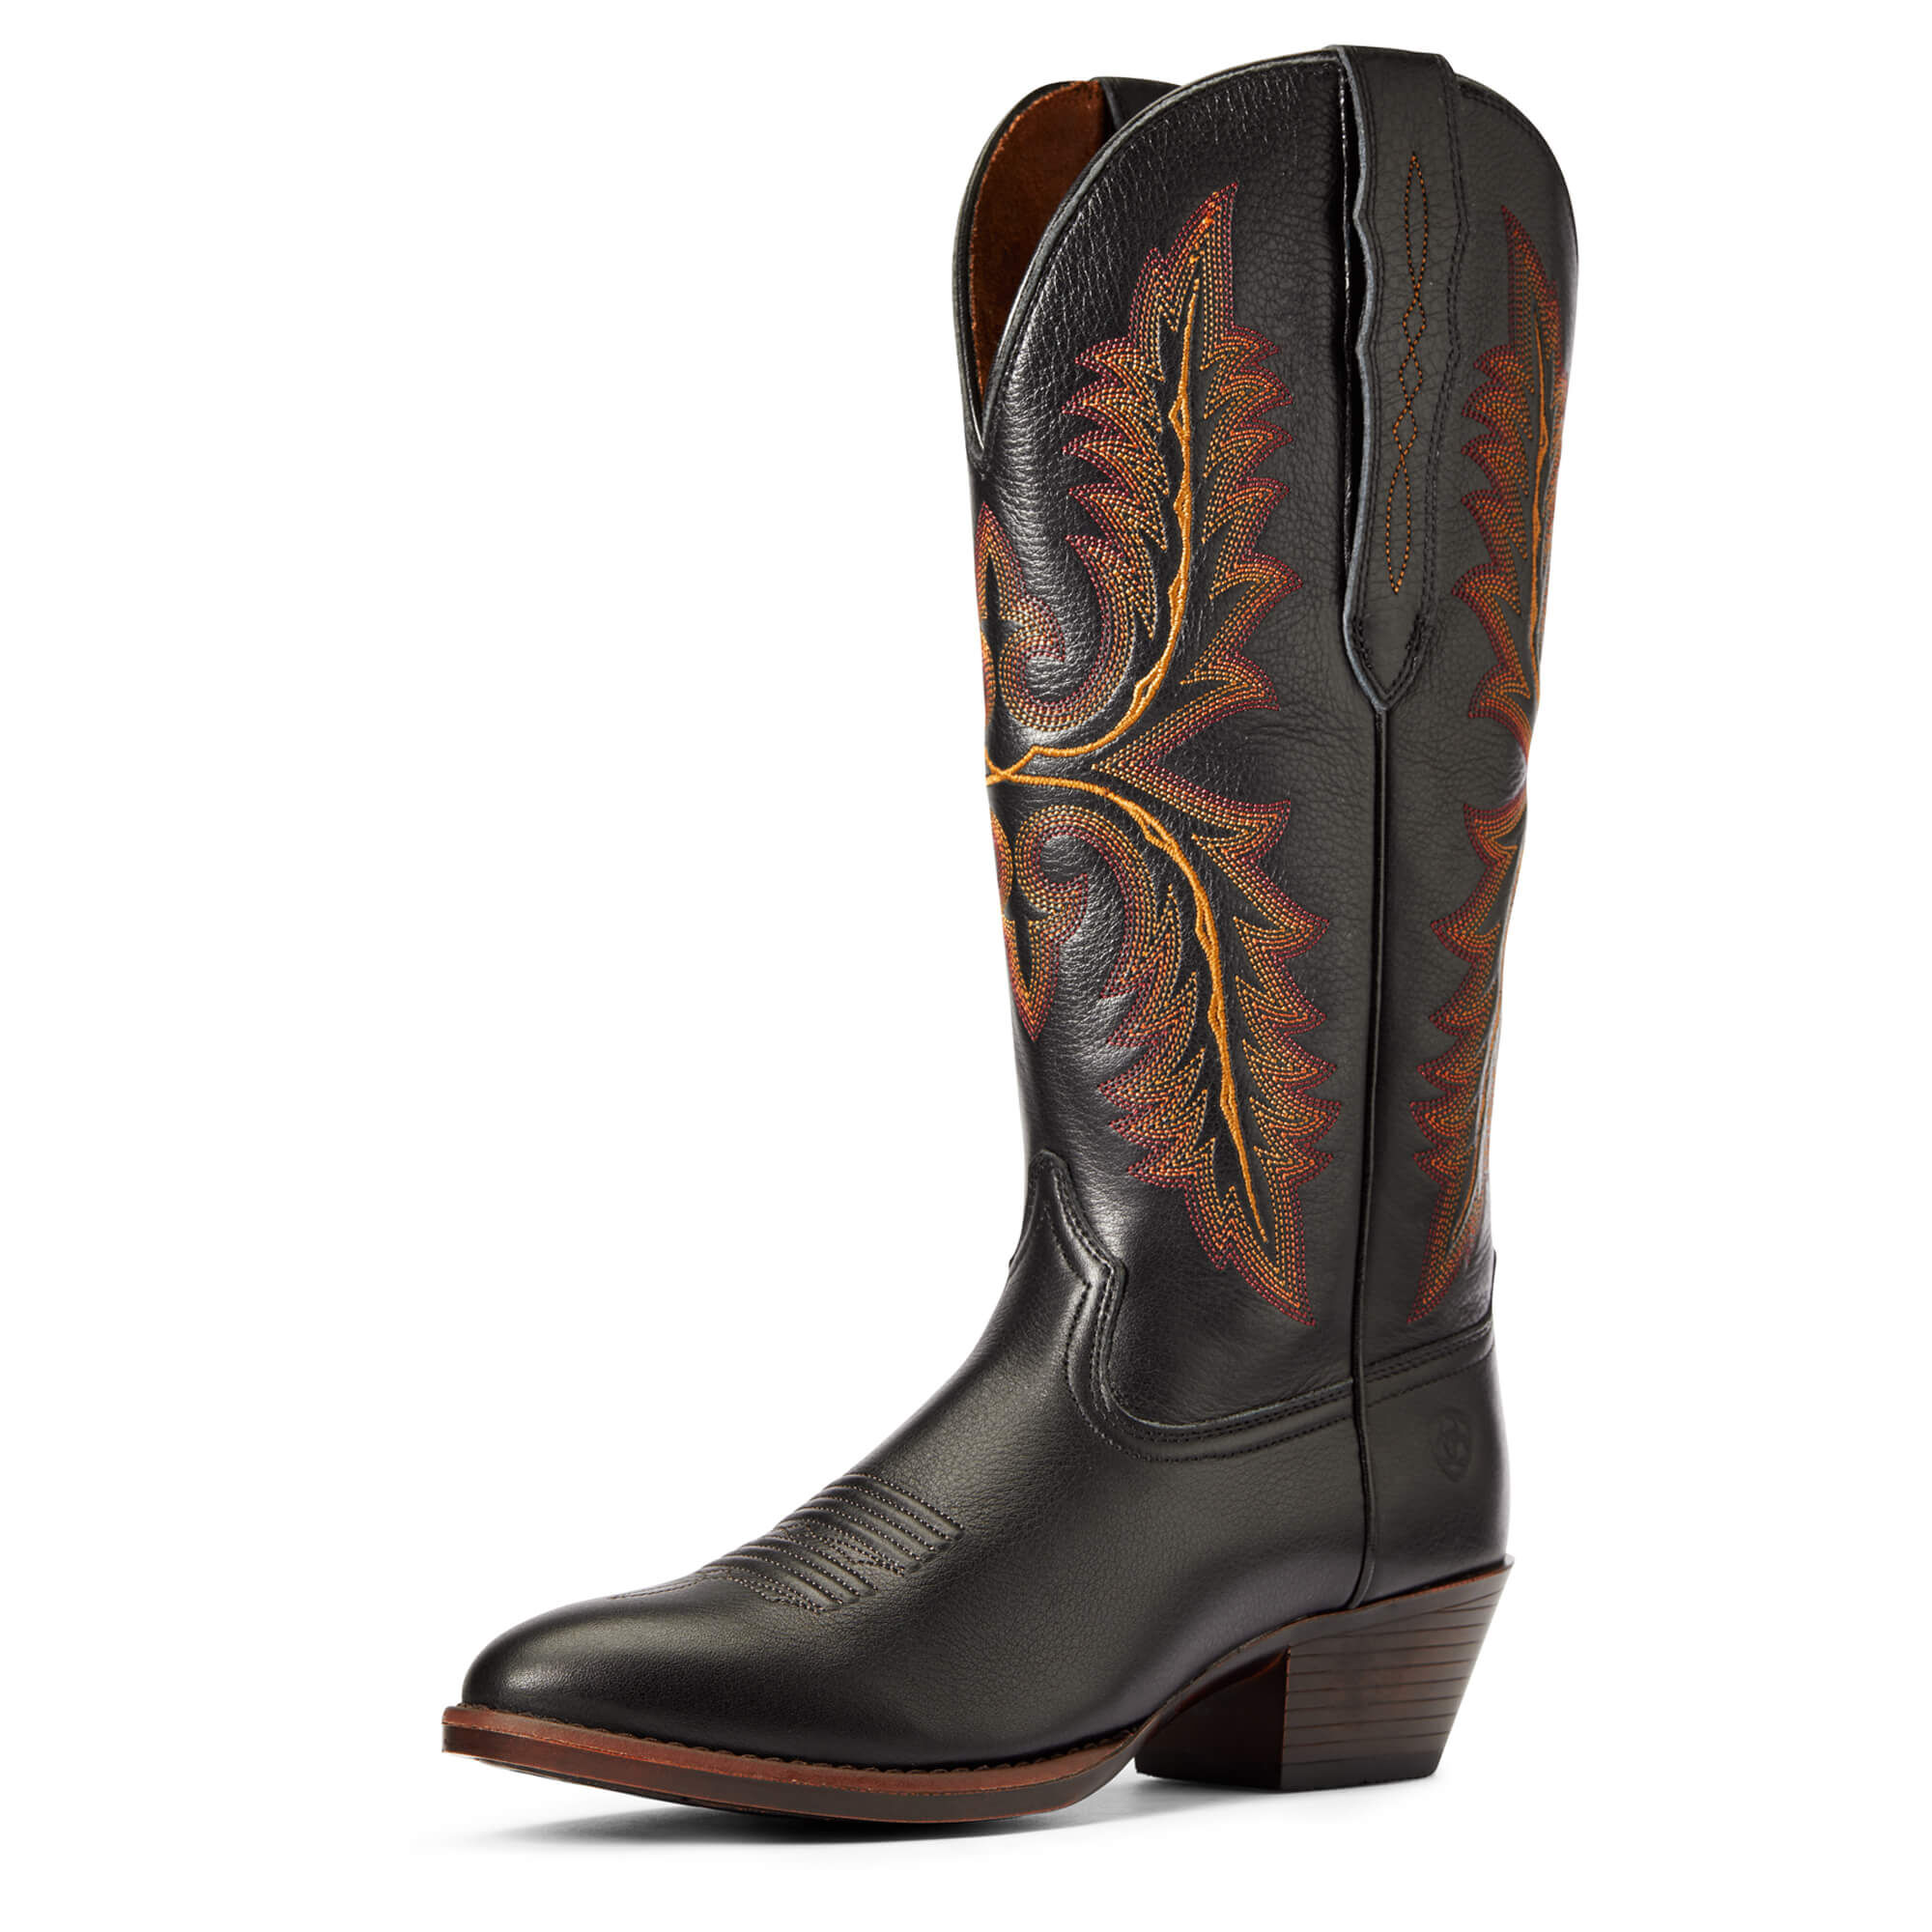 Women's Heritage Elastic Calf Western Boots in Black Deertan Leather  by Ariat